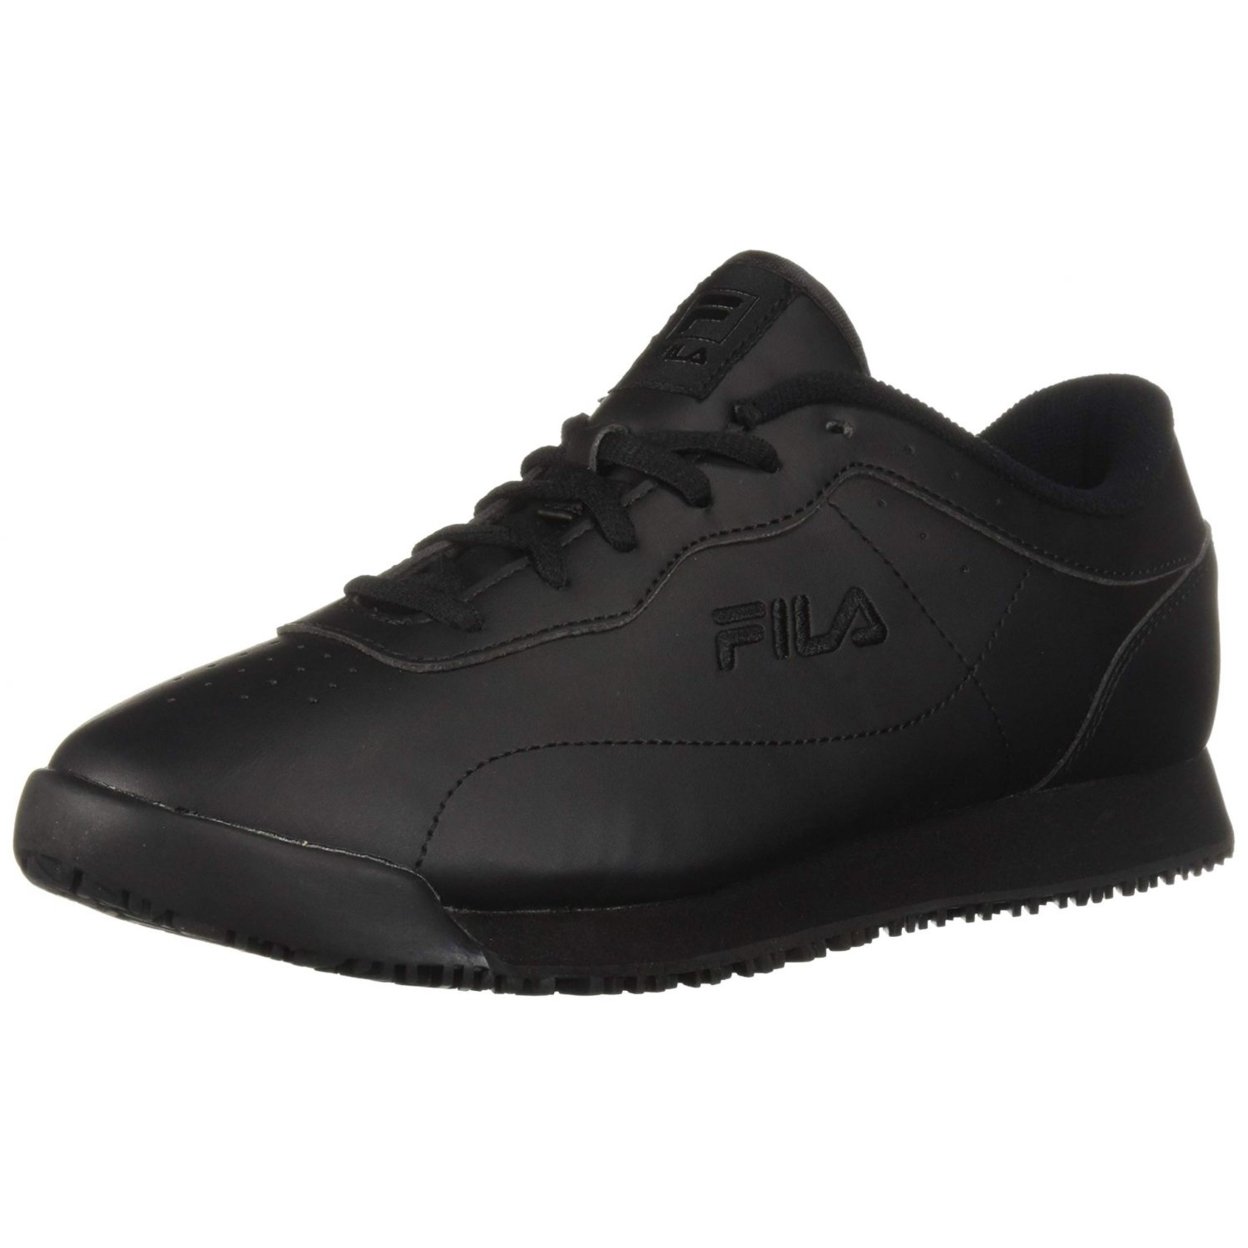 Fila Memory Viable Sr Wide Womens Shoes Size 10, Color: Black 0 BLK/BLK/BLK - BLK/BLK/BLK, 6